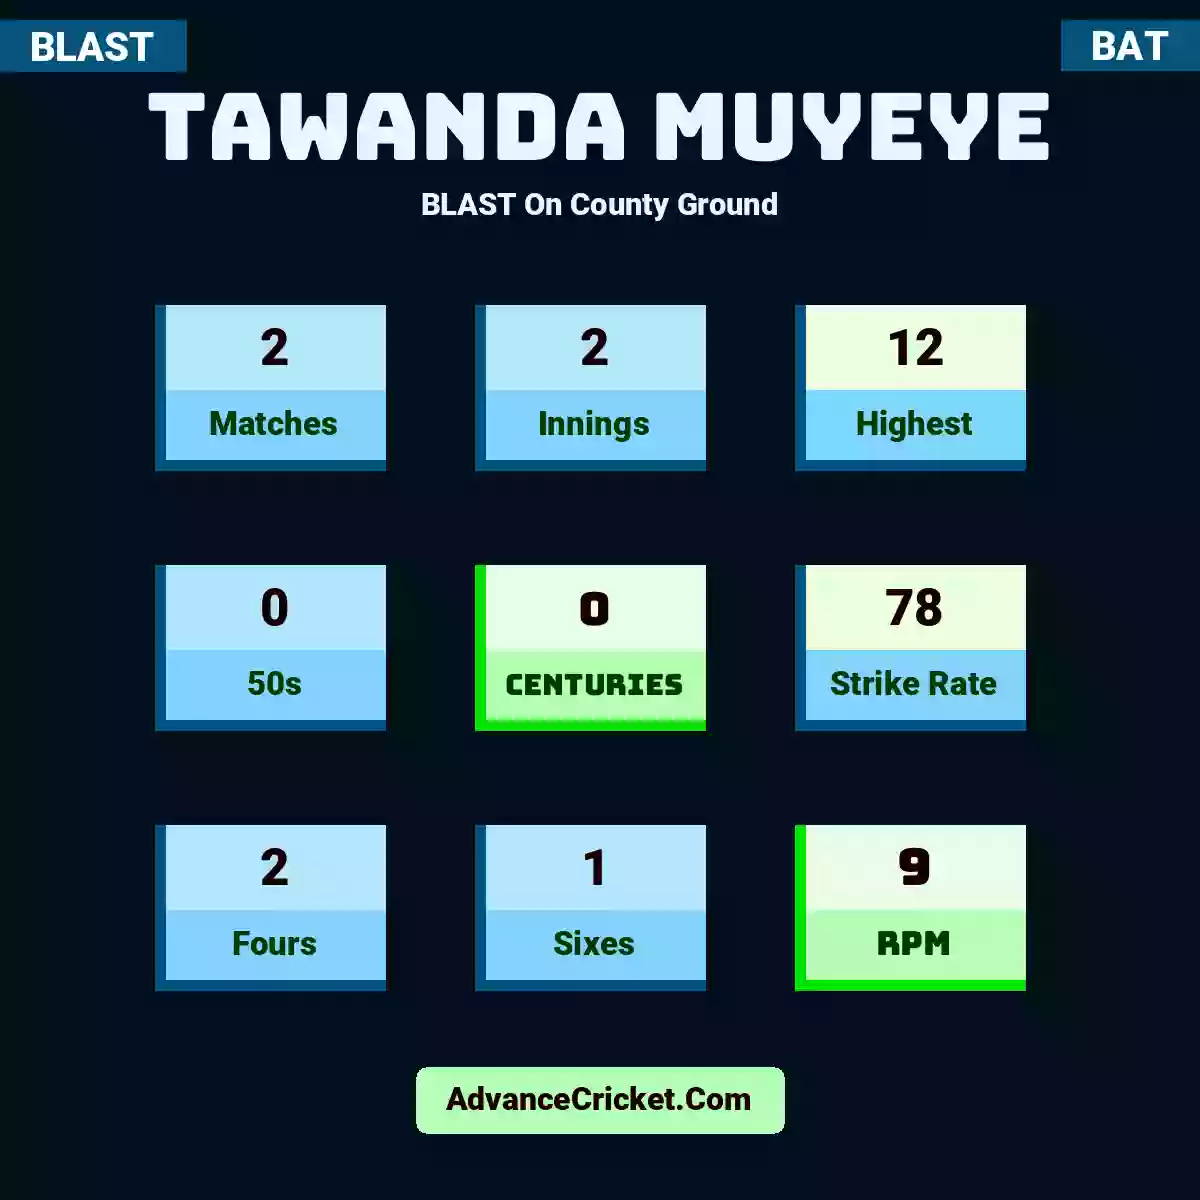 Tawanda Muyeye BLAST  On County Ground, Tawanda Muyeye played 2 matches, scored 12 runs as highest, 0 half-centuries, and 0 centuries, with a strike rate of 78. T.Muyeye hit 2 fours and 1 sixes, with an RPM of 9.